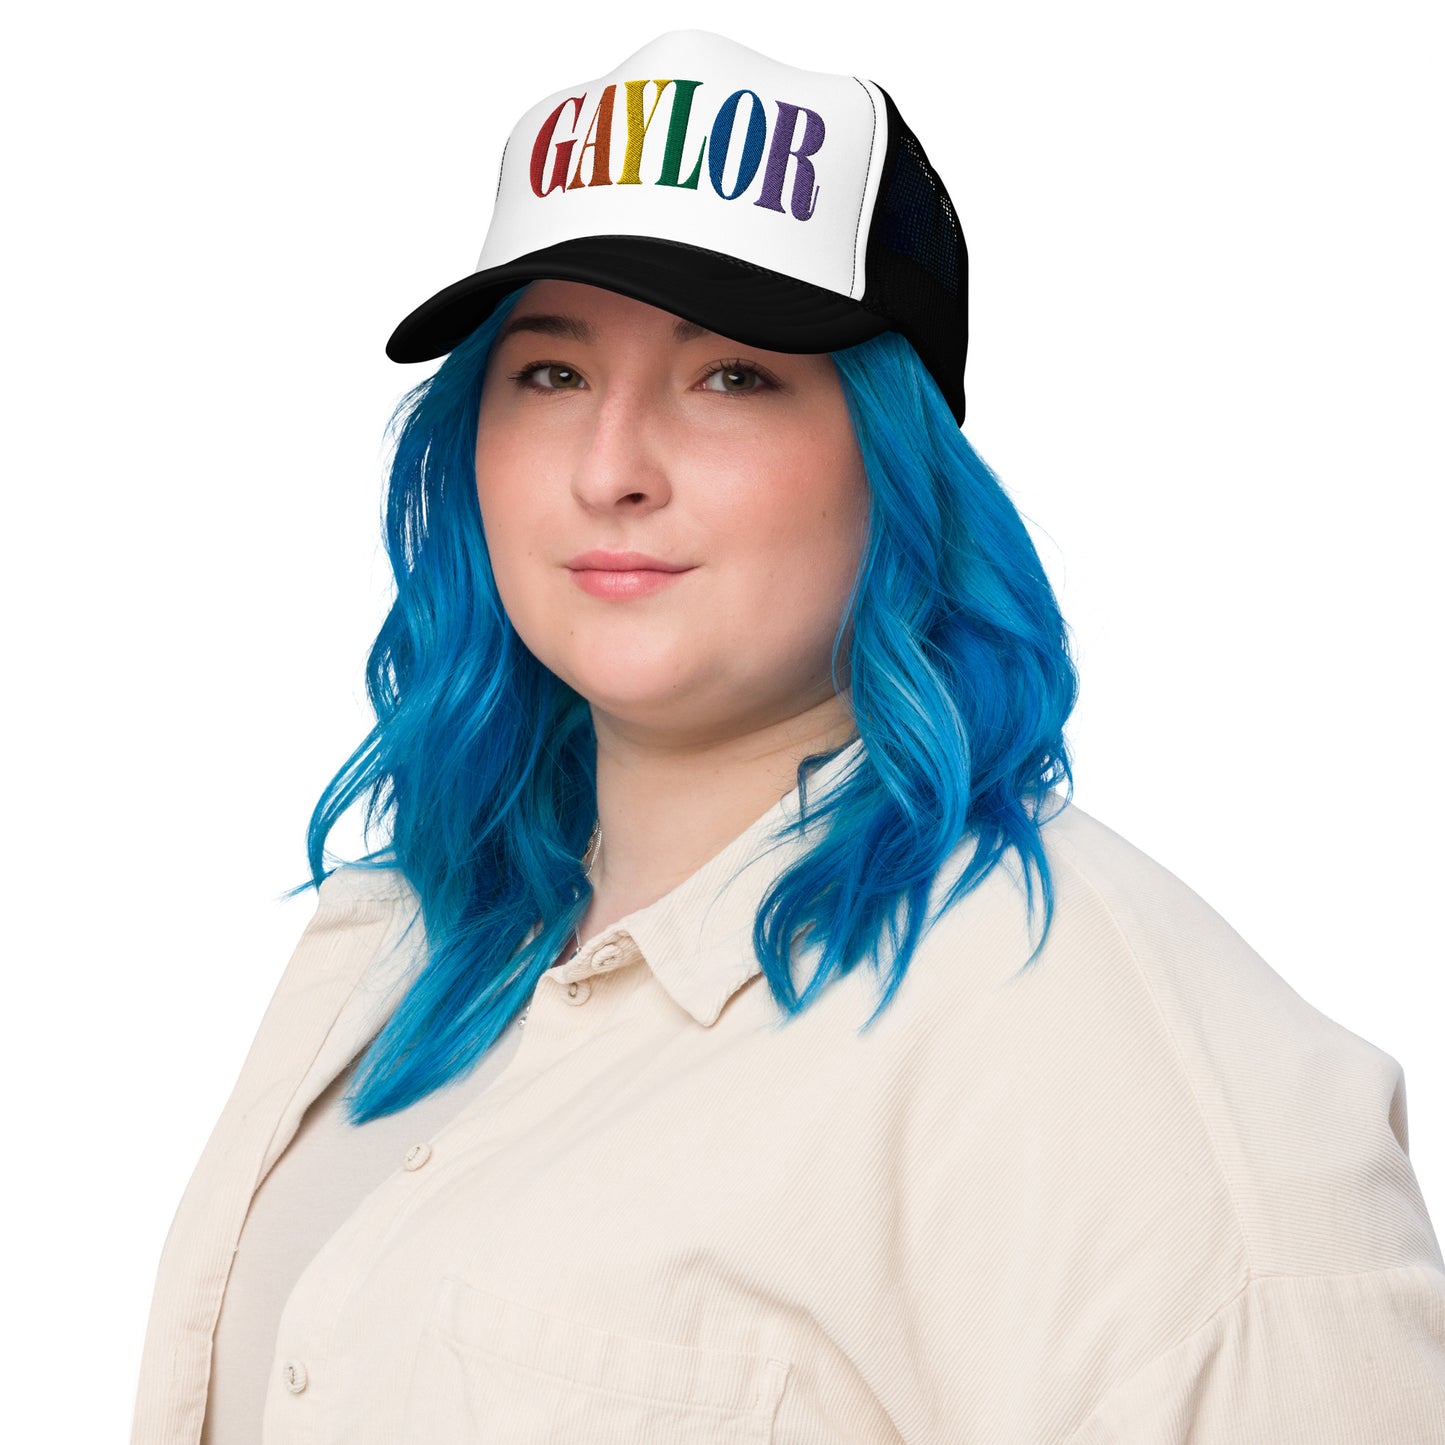 Gaylor Trucker Hat